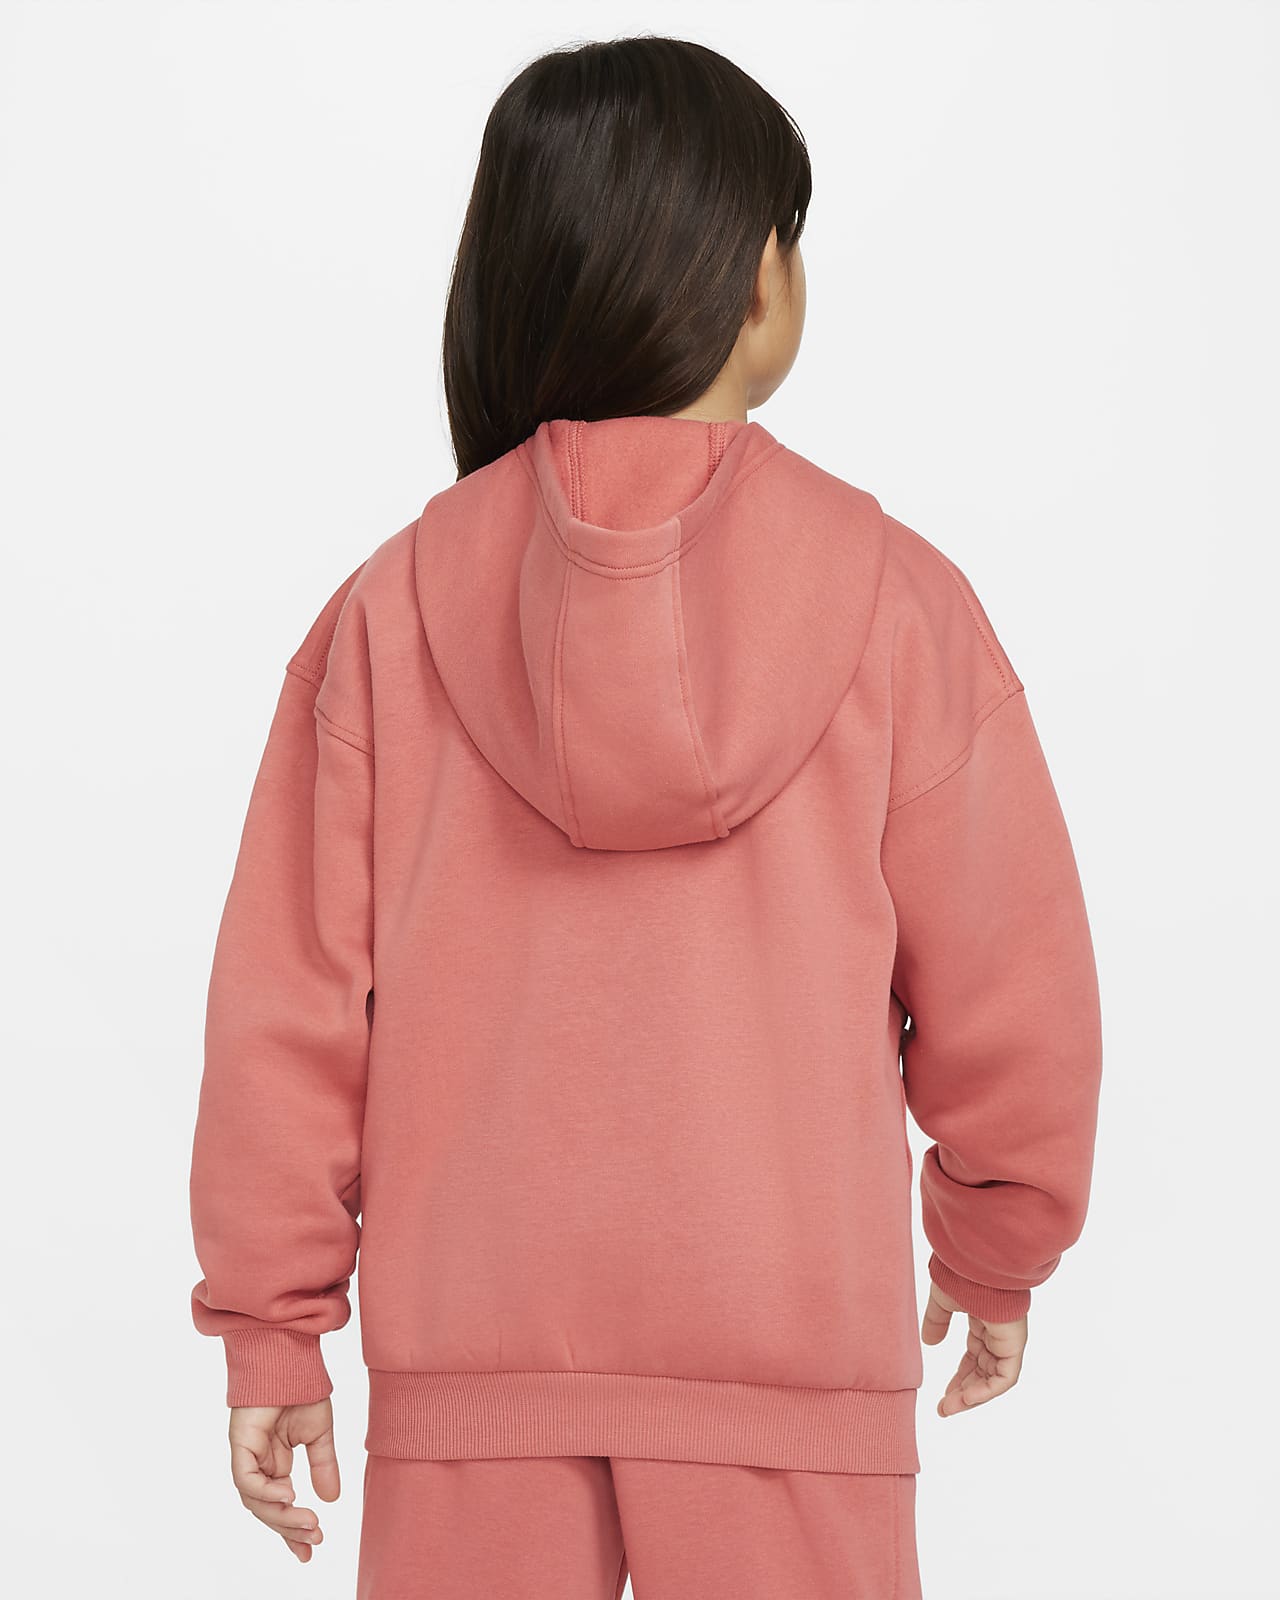 AHA SELECTED Oversized Hoodie Women Double Zip Up Sweatshirts with Pocket  for Teen Girl Fleece Hoodies : : Clothing, Shoes & Accessories